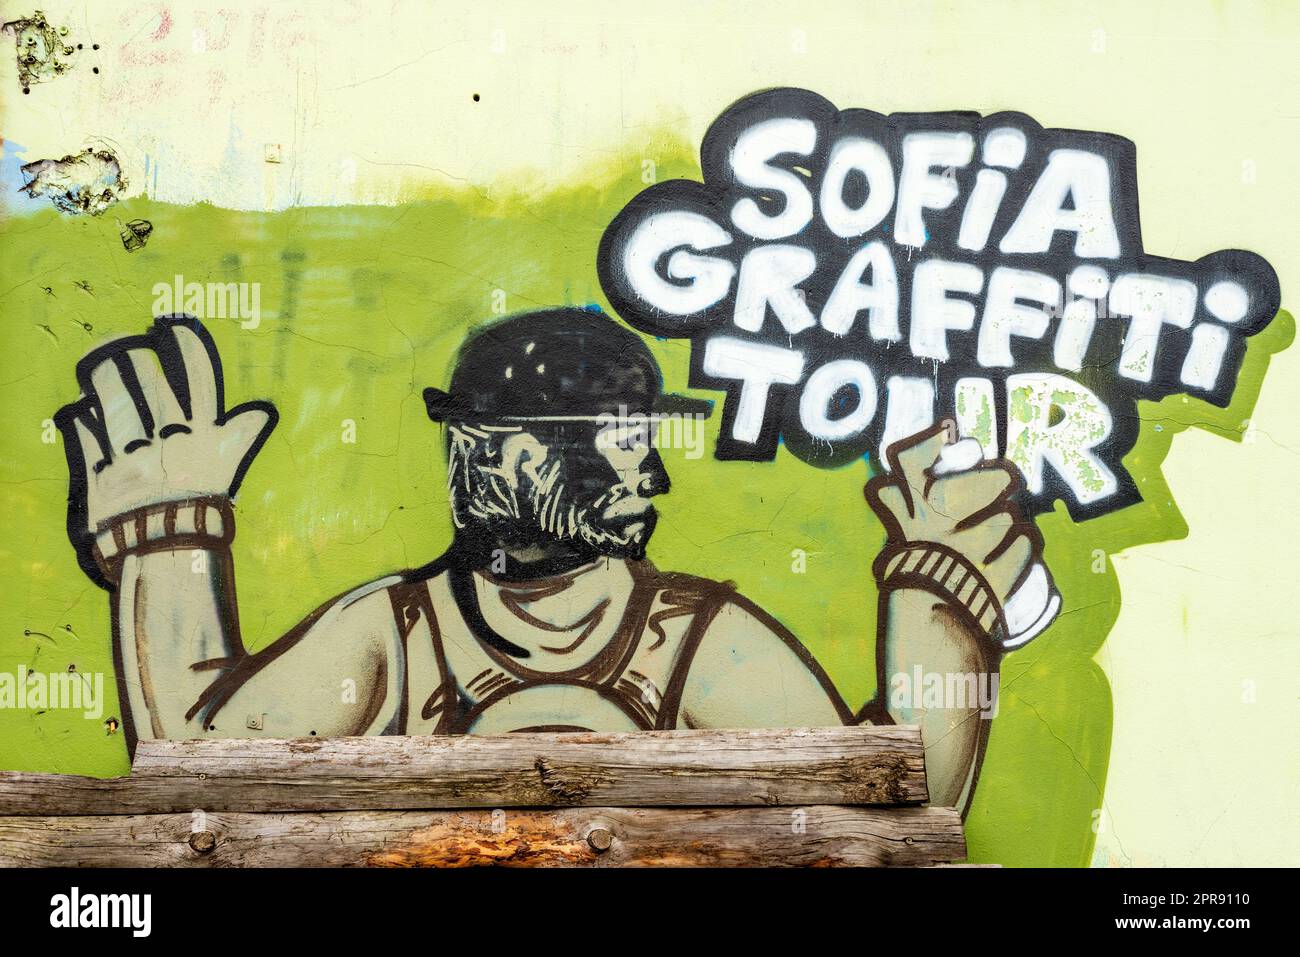 Sofia graffiti tour urban street art in Sofia, Bulgaria, Eastern Europe, Balkans, EU Stock Photo